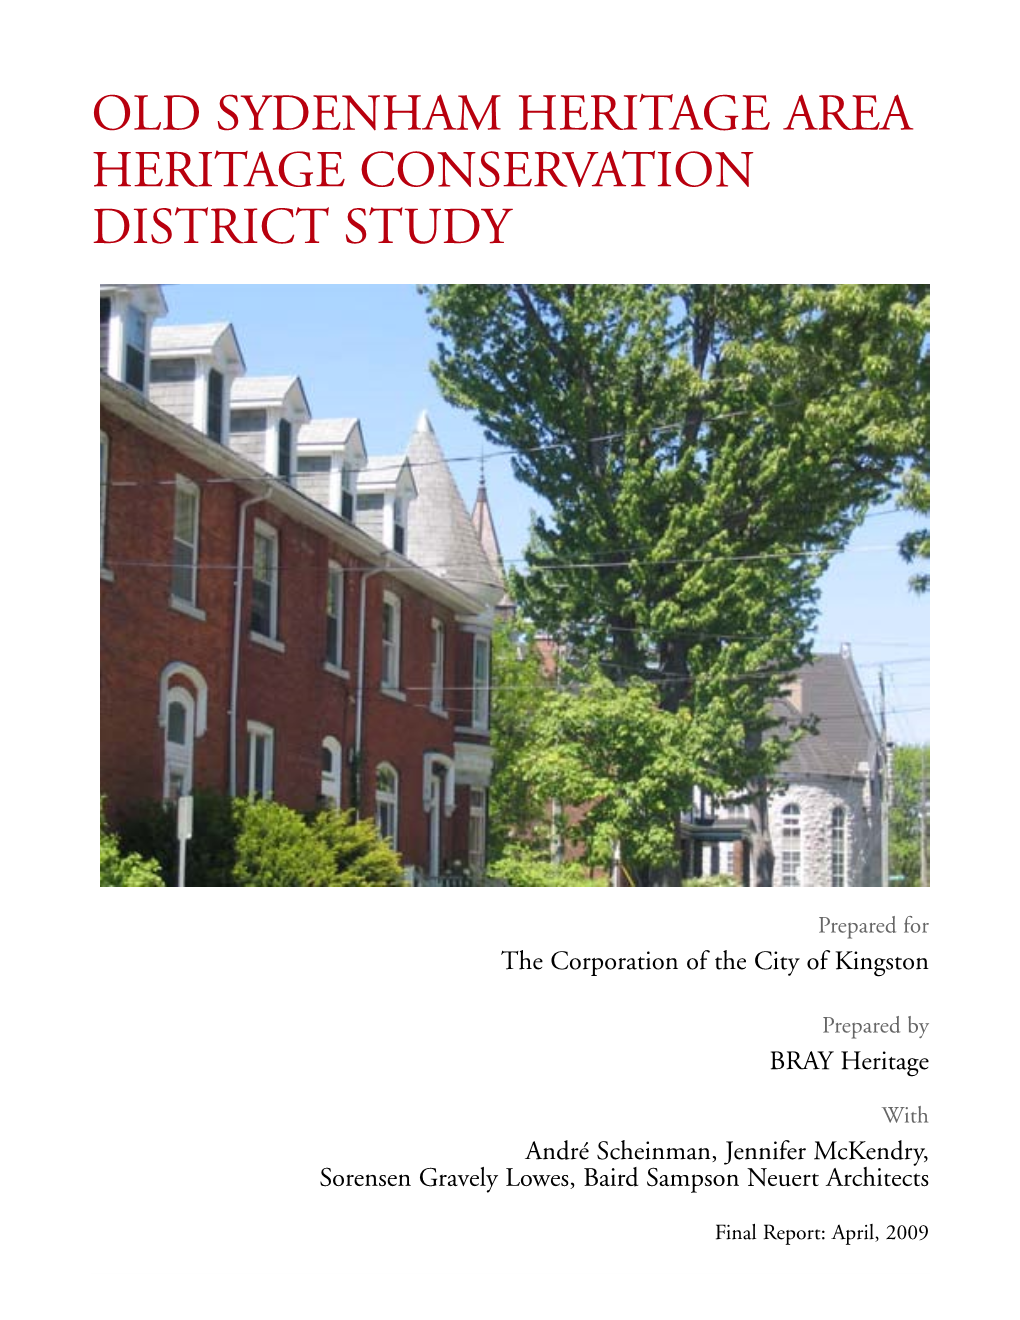 Sydenham Heritage Area Heritage Conservation District Study